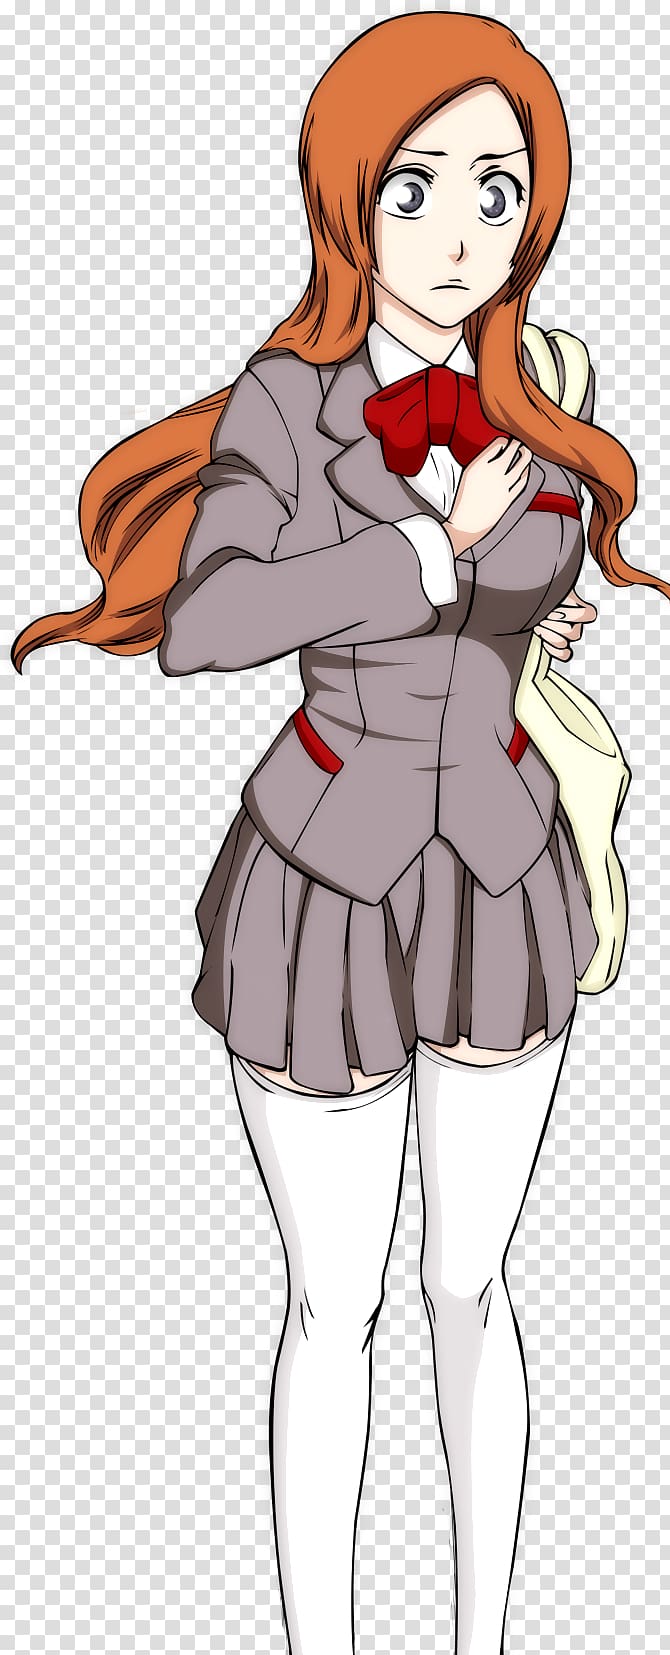 Orihime Inoue Anime Bleach Character Manga School Uniform